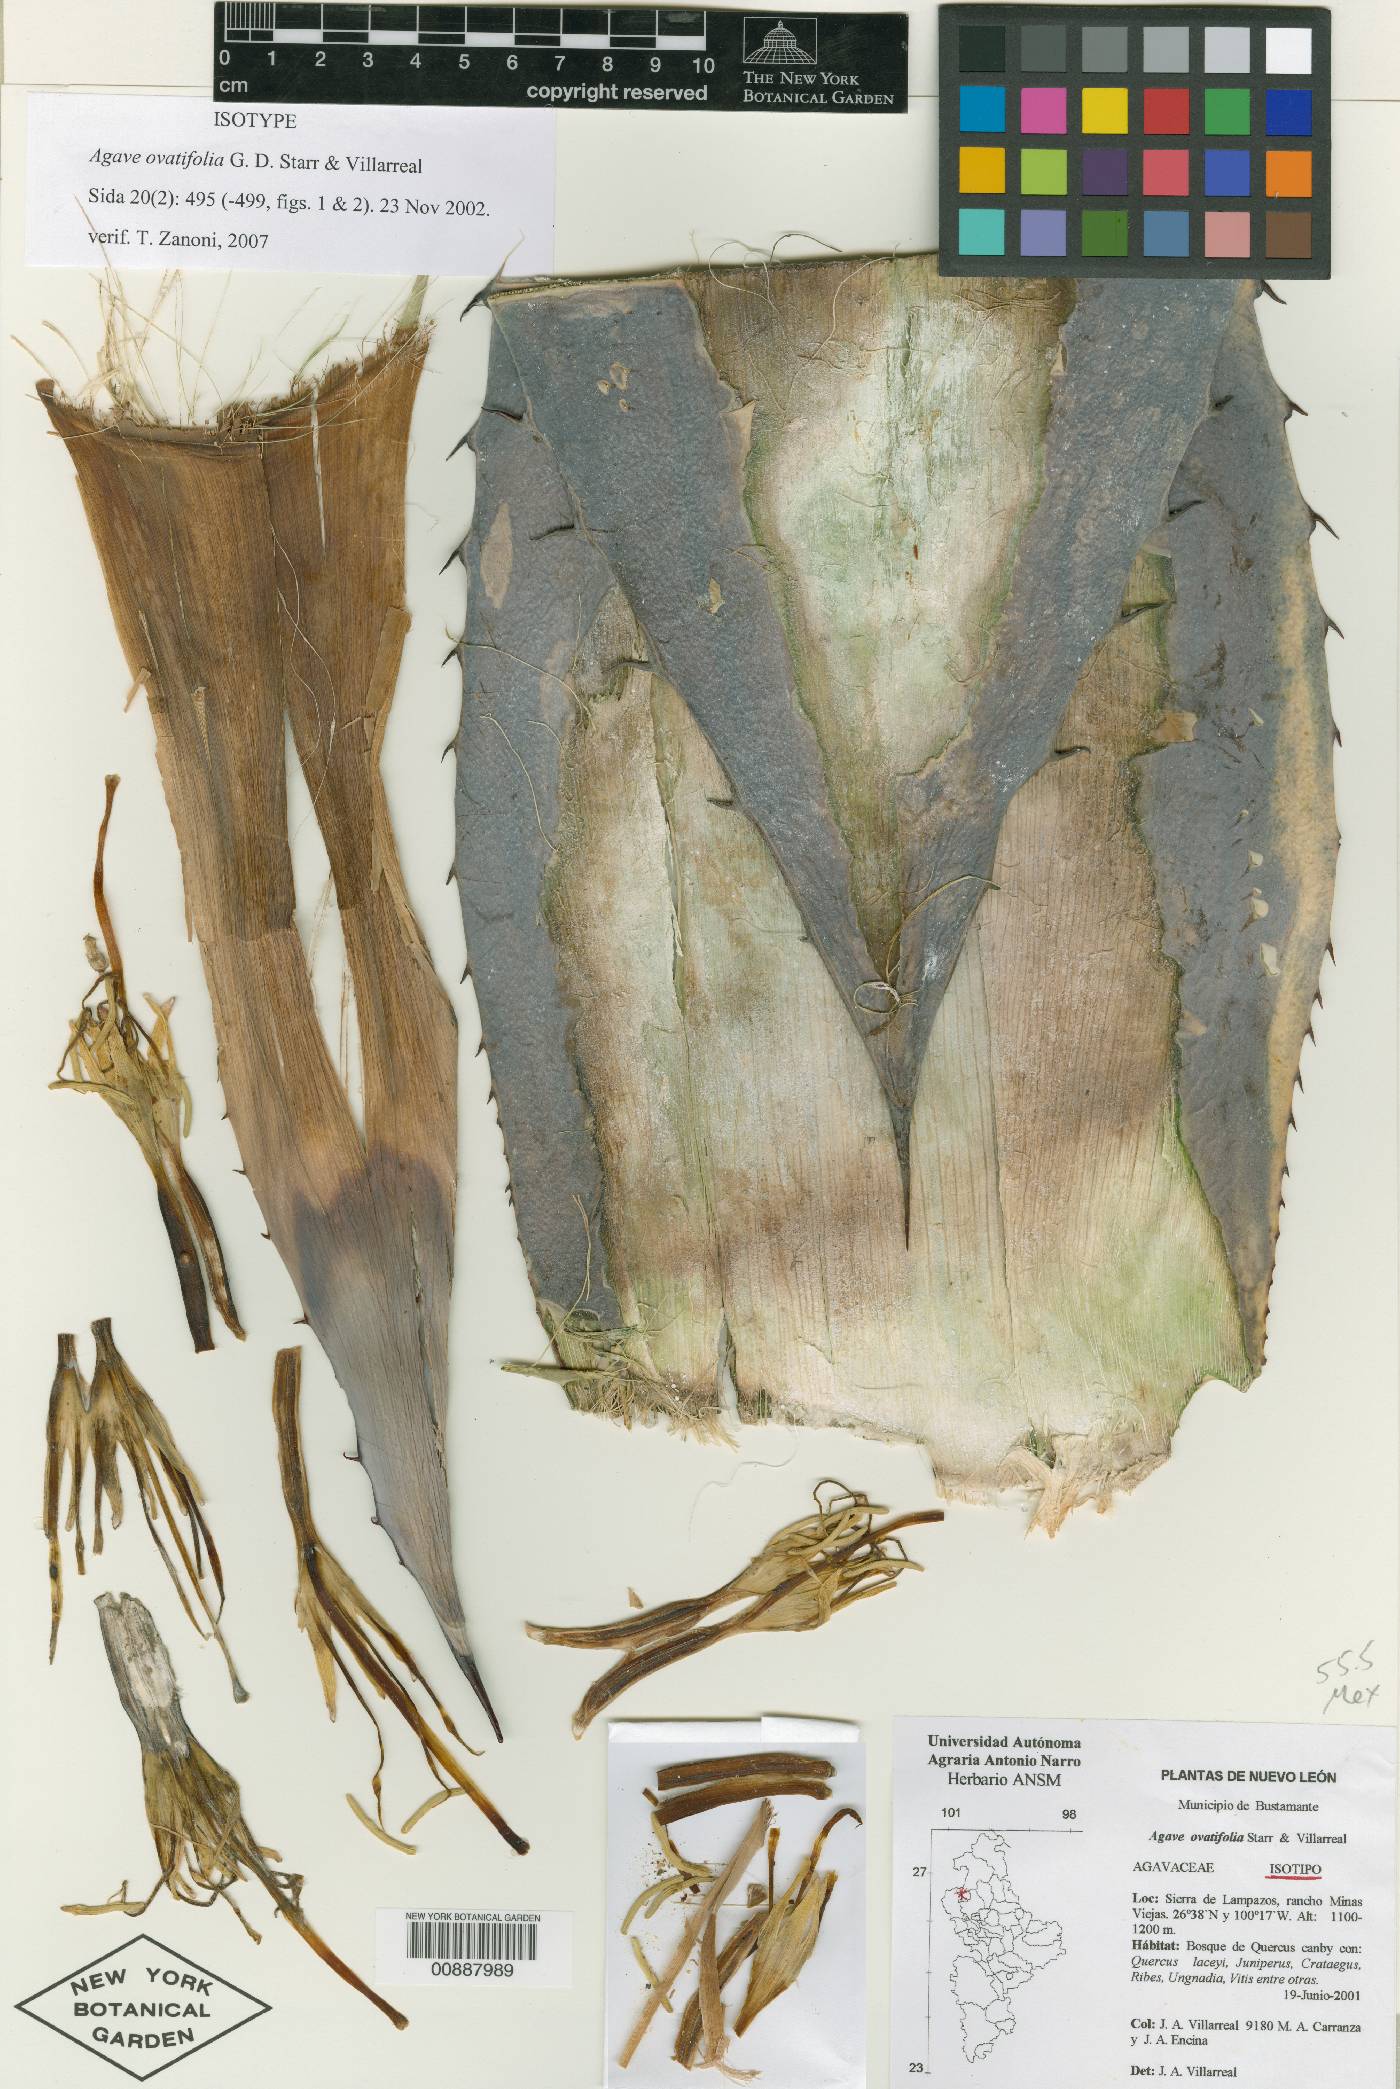 Agave ovatifolia image